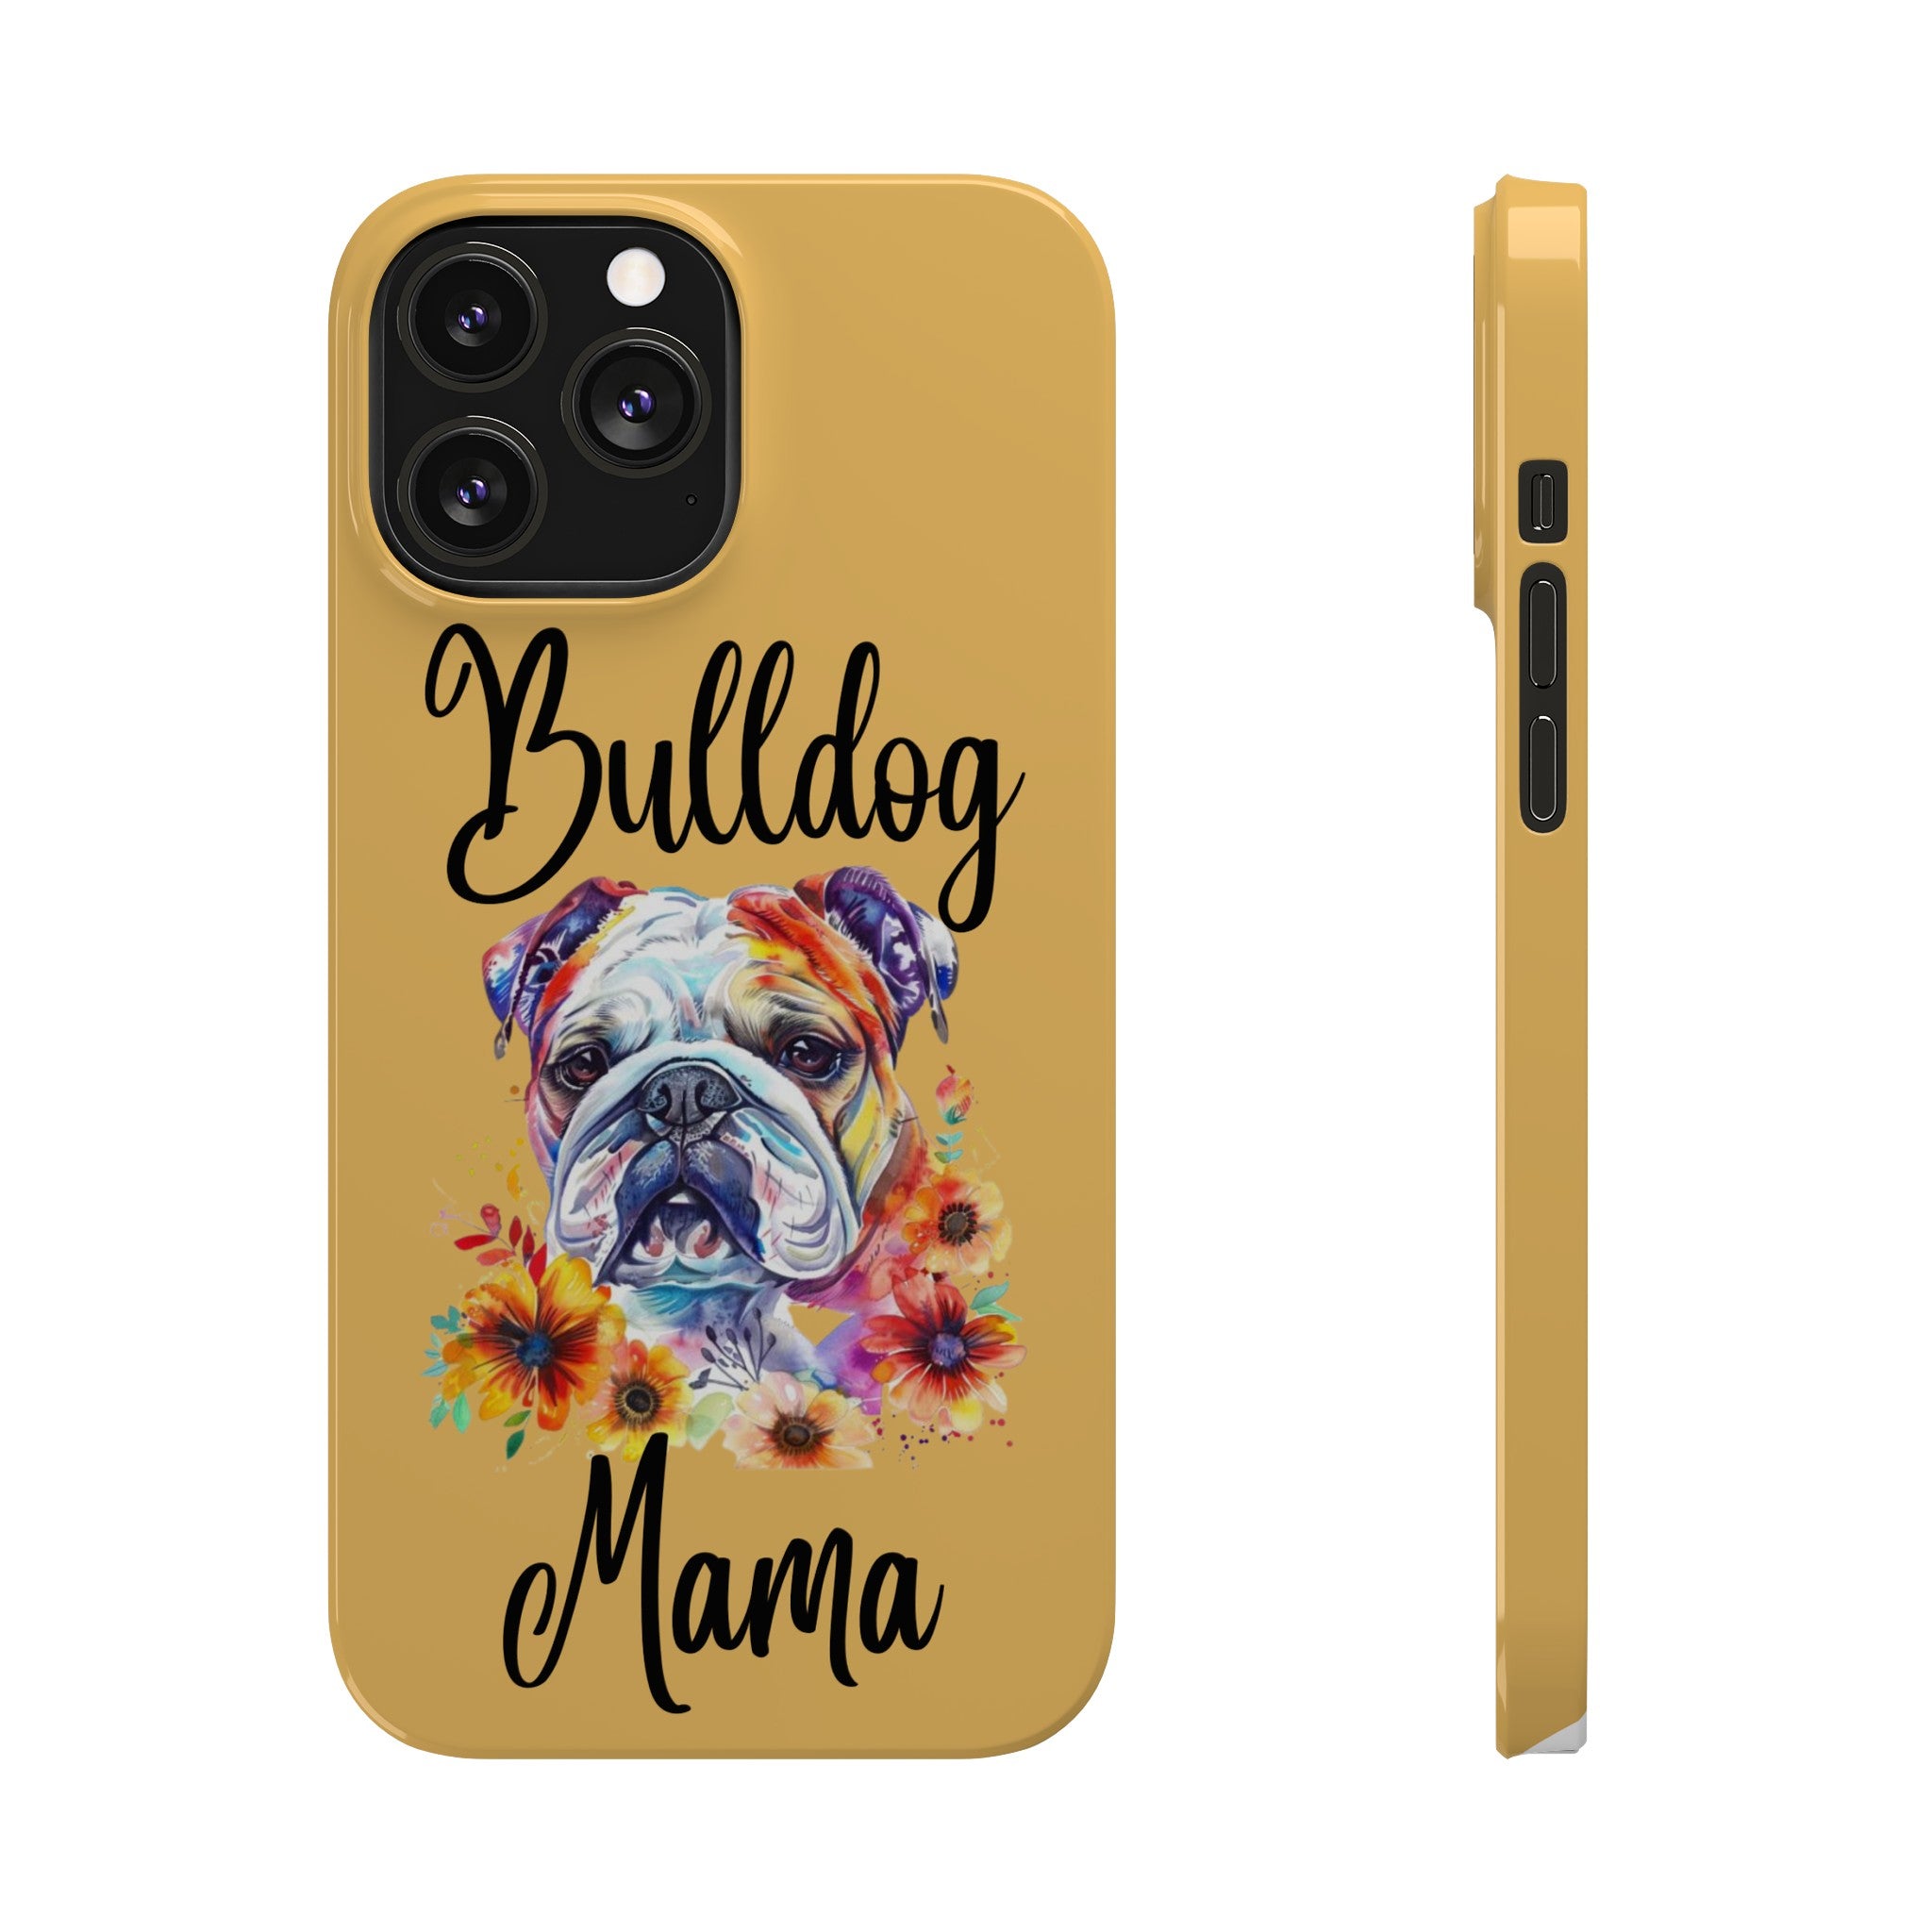 Bulldog iPhone Cases (Engish/watercolor)